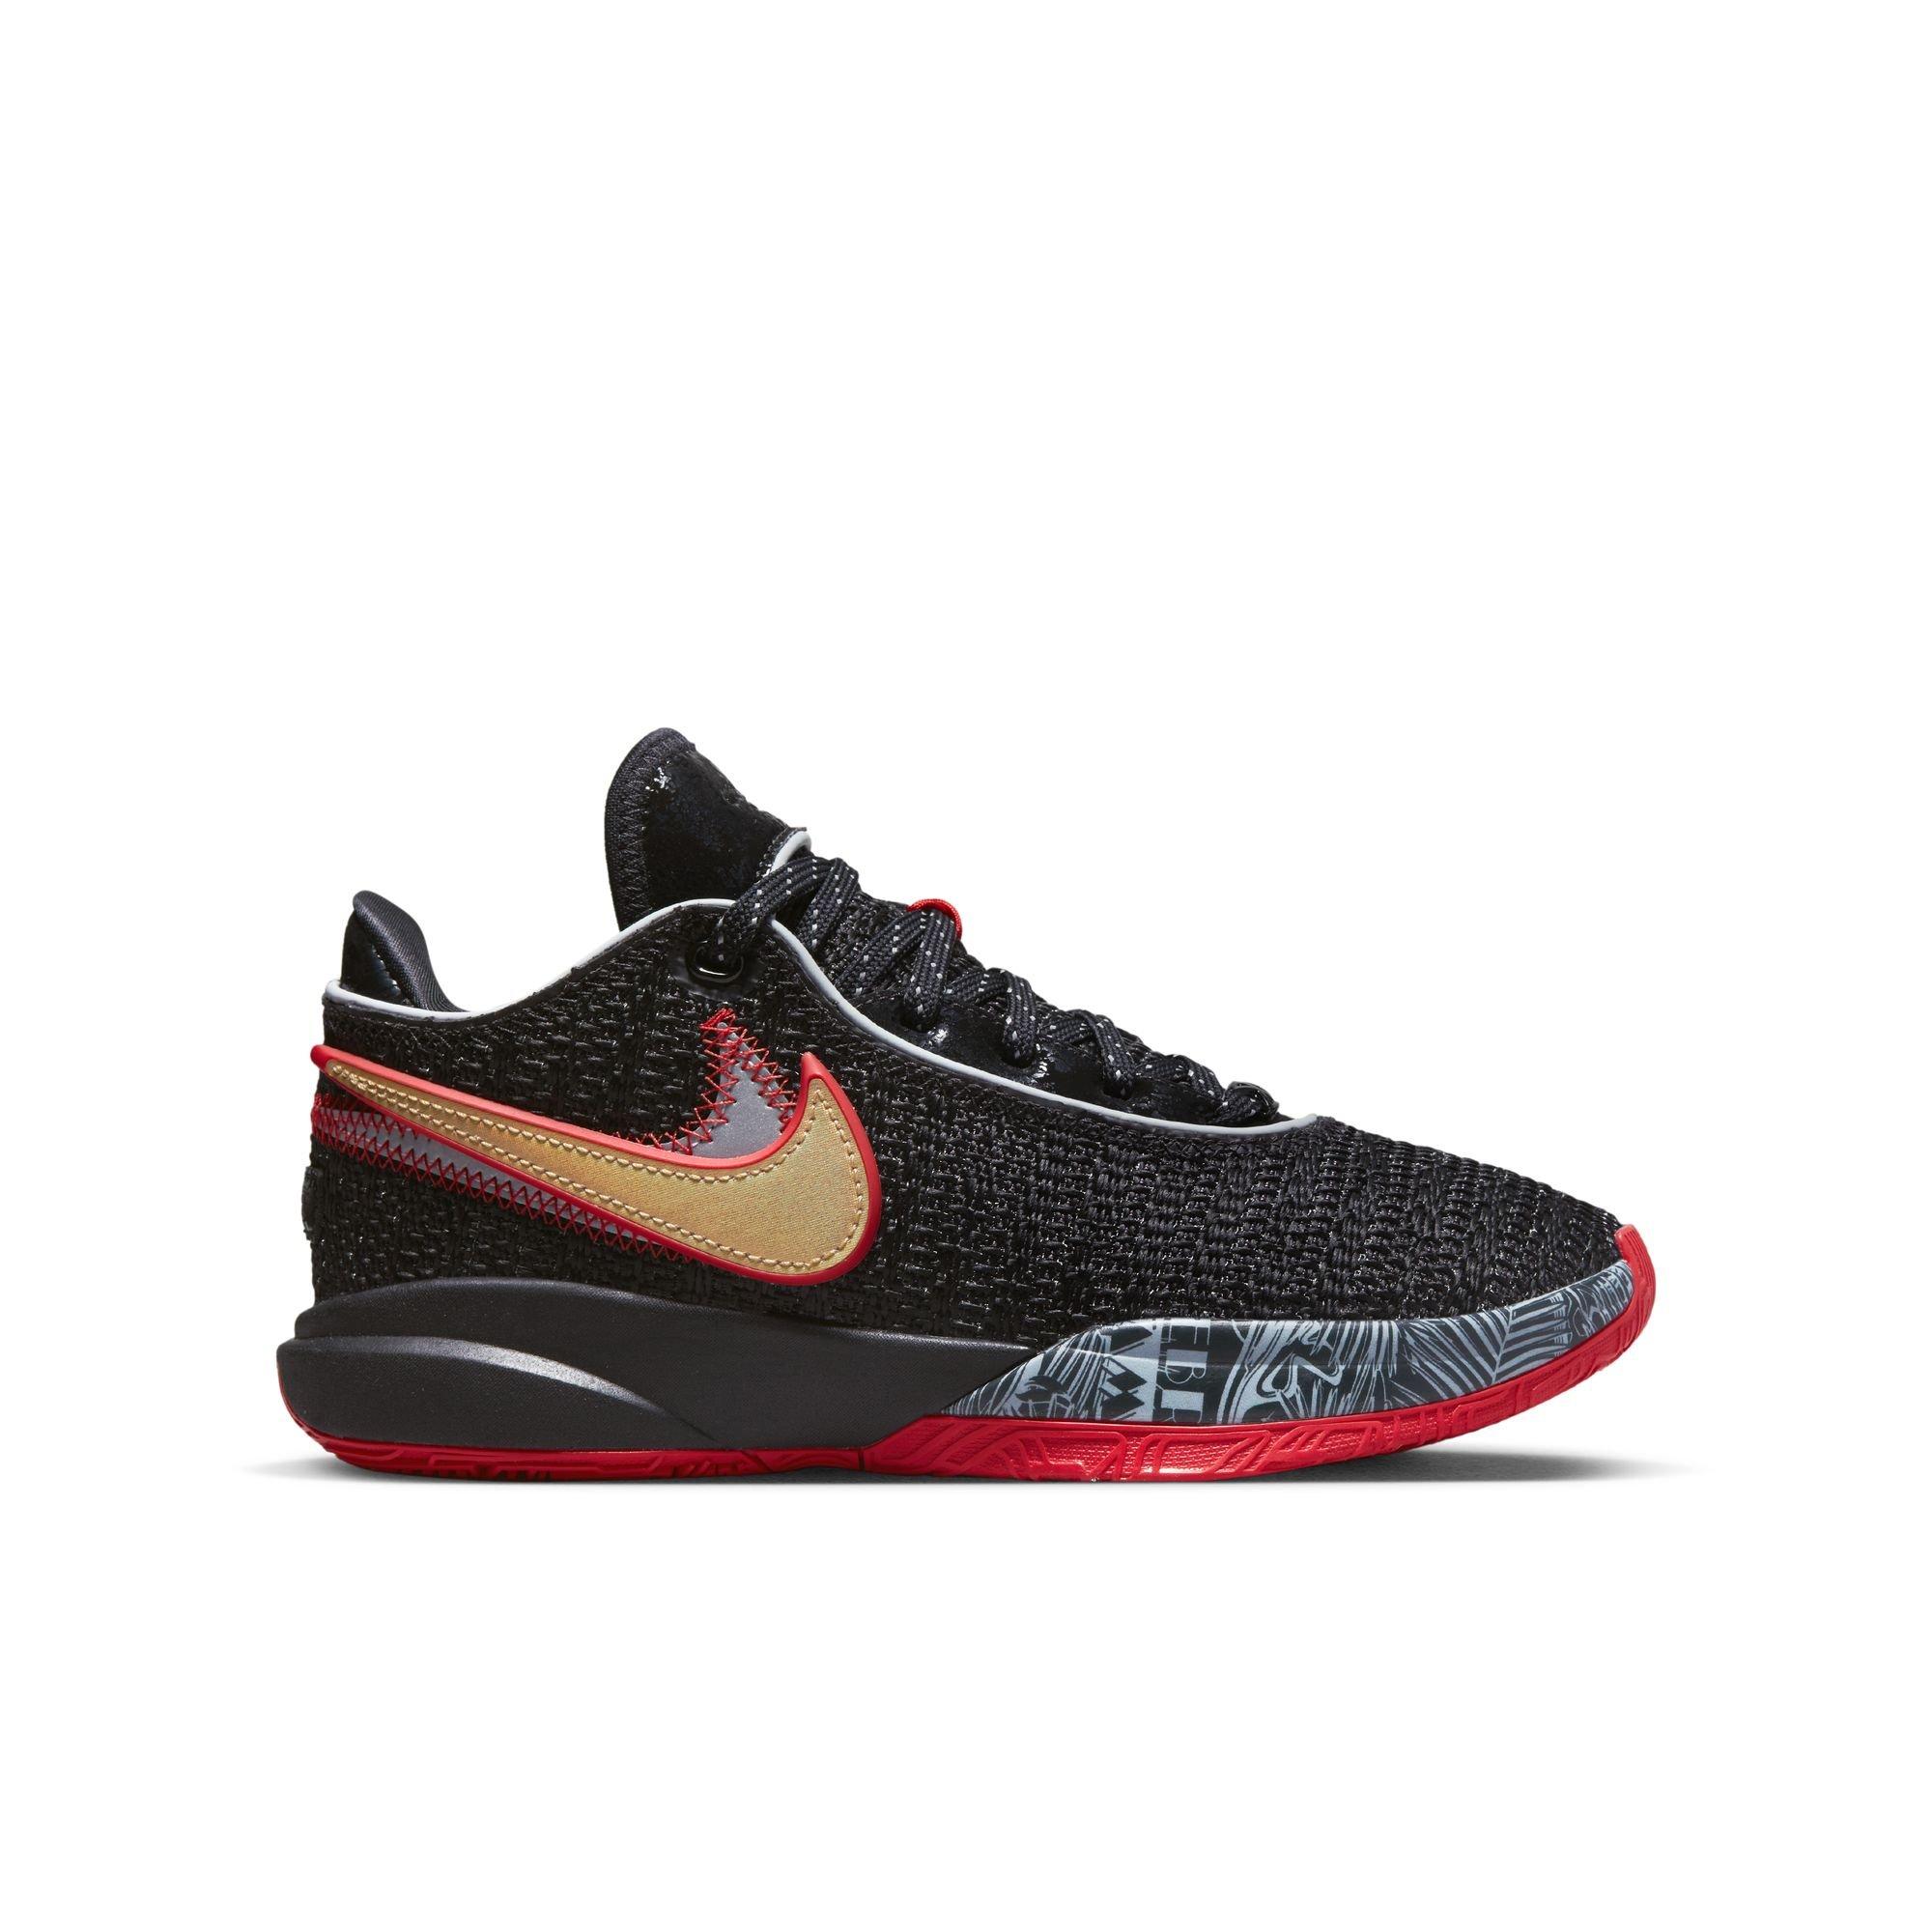 Boy's Nike Lebron James Basketball Shoes Sneakers Black Orange Size 4.5  Youth